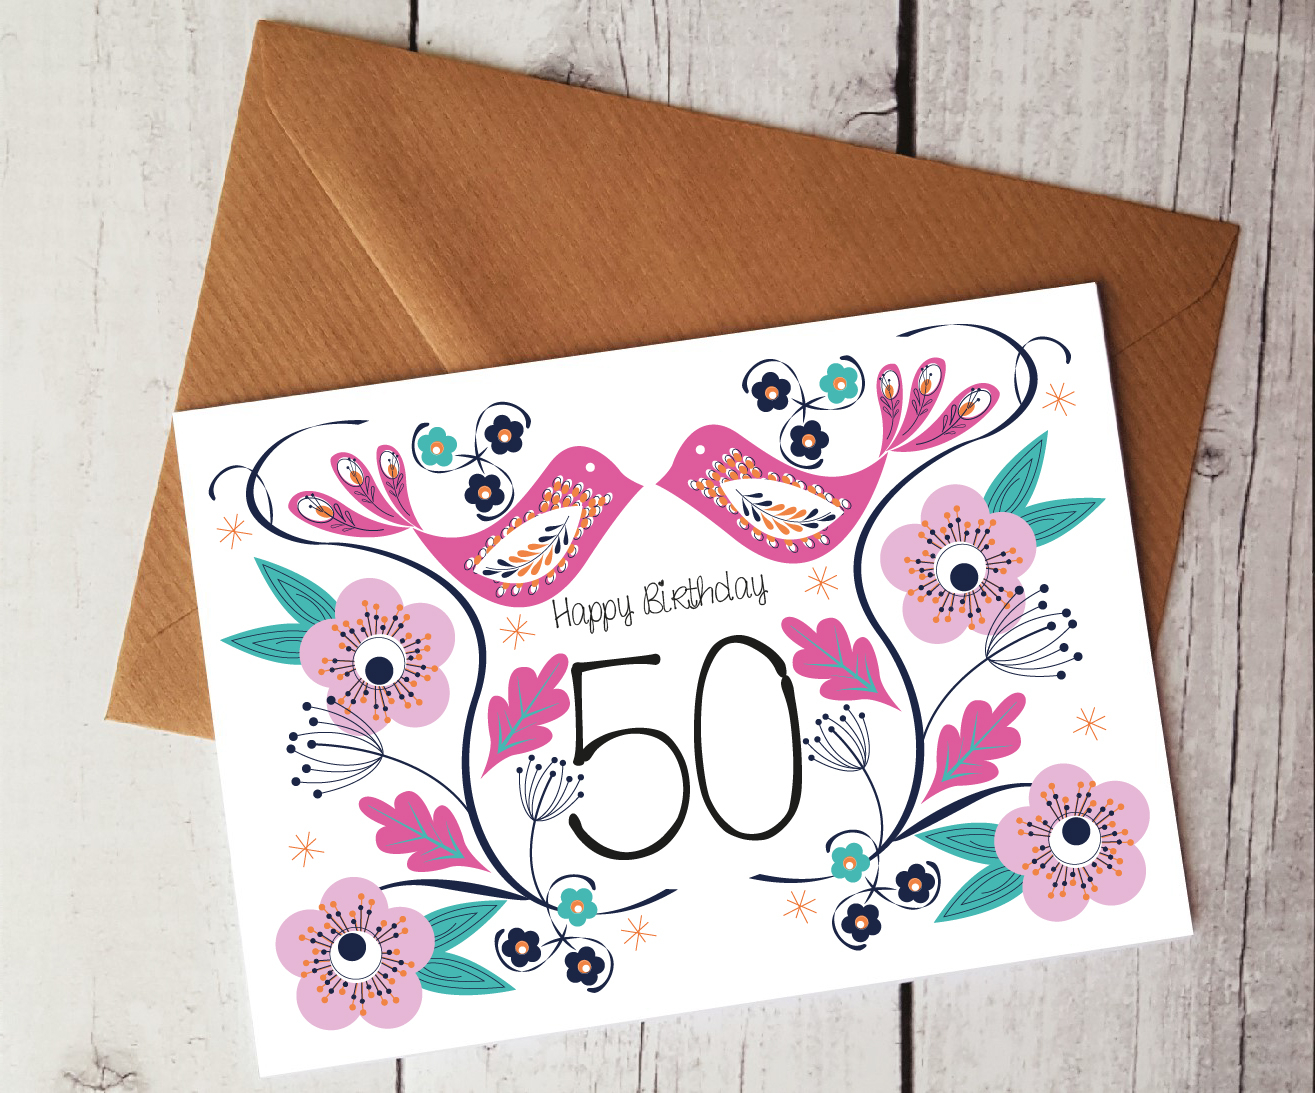 Handmade 50Th Birthday Card Ideas 50th Birthday Card